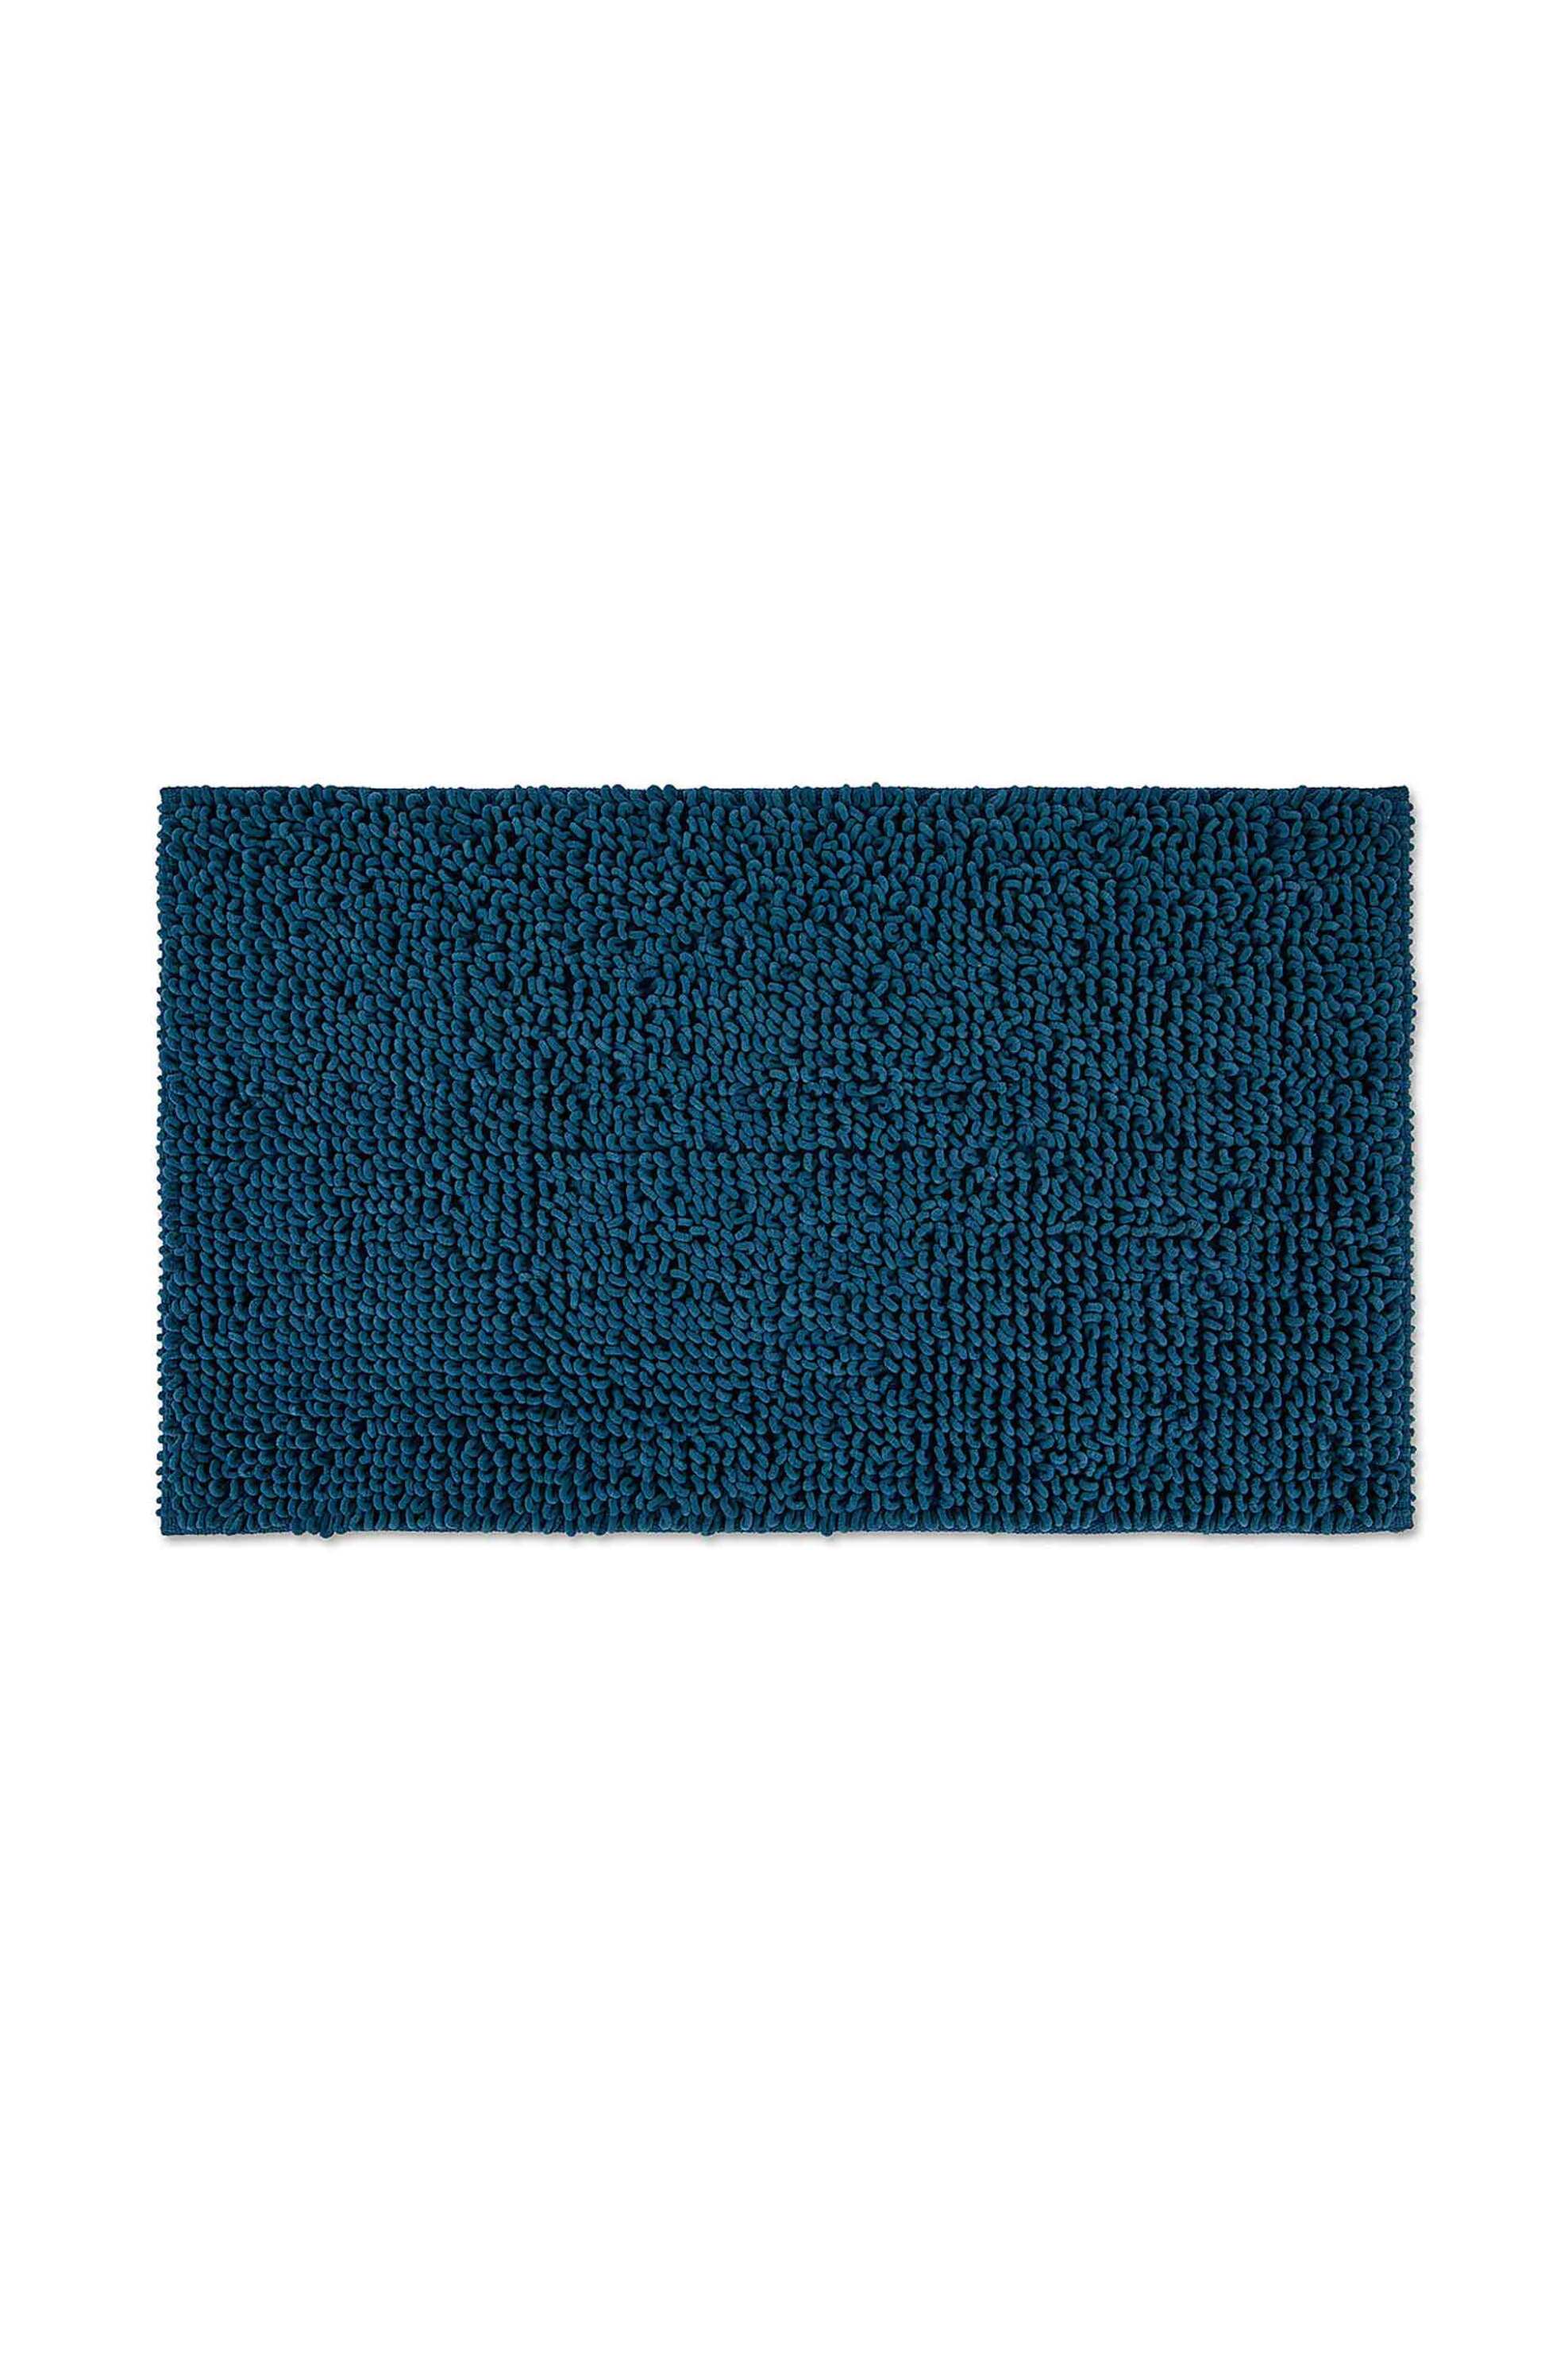 Home > ΜΠΑΝΙΟ > Χαλάκια Μπάνιου Coincasa χαλάκι μπάνιου από μικροΐνες με αντιολισθητική βάση "Shaggy" 120 x 70 cm - 007358372 Μπλε Σκούρο